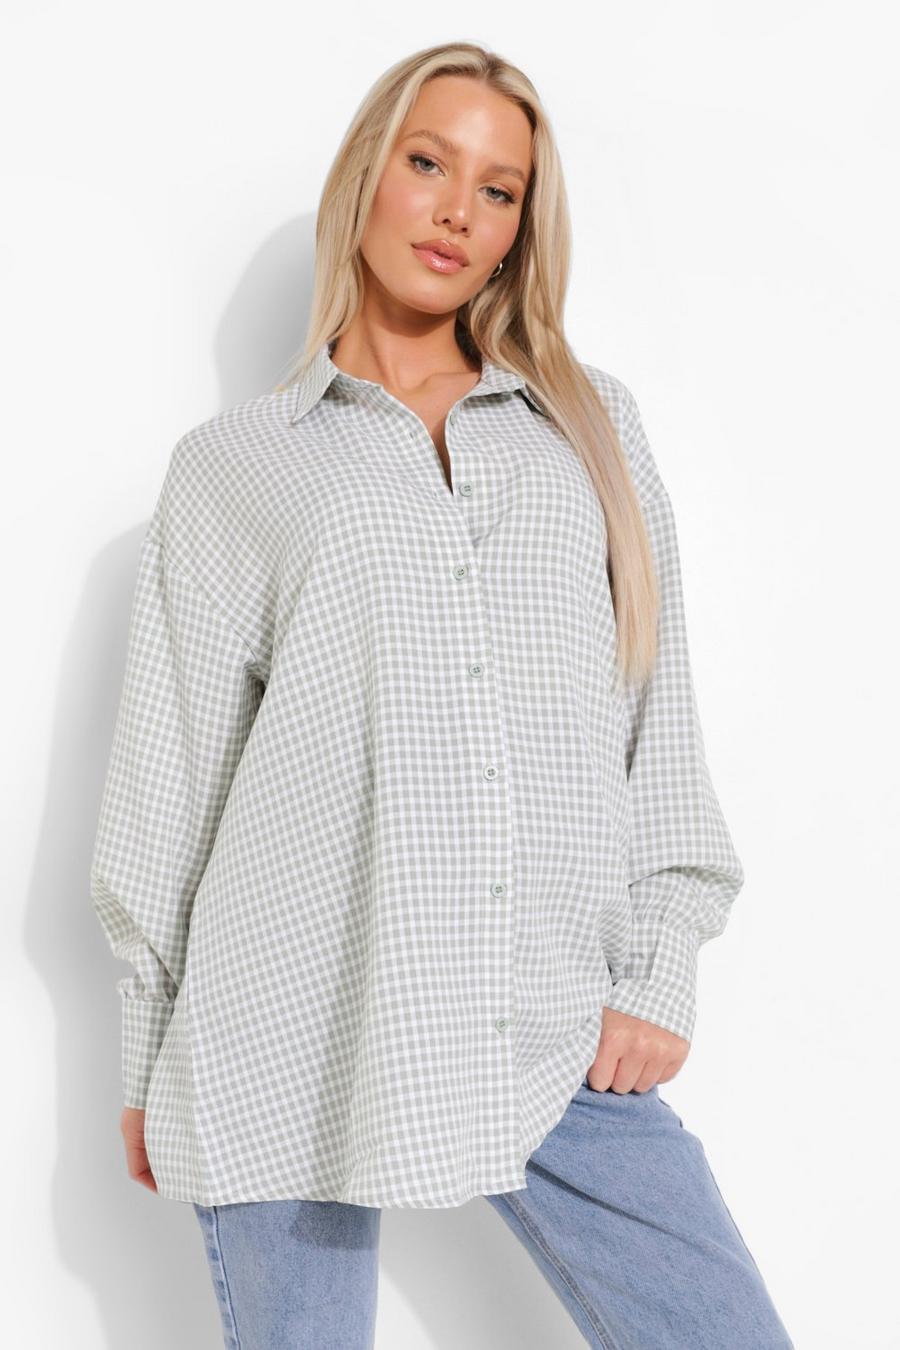 Sage Mammakläder - Oversize rutig skjorta image number 1